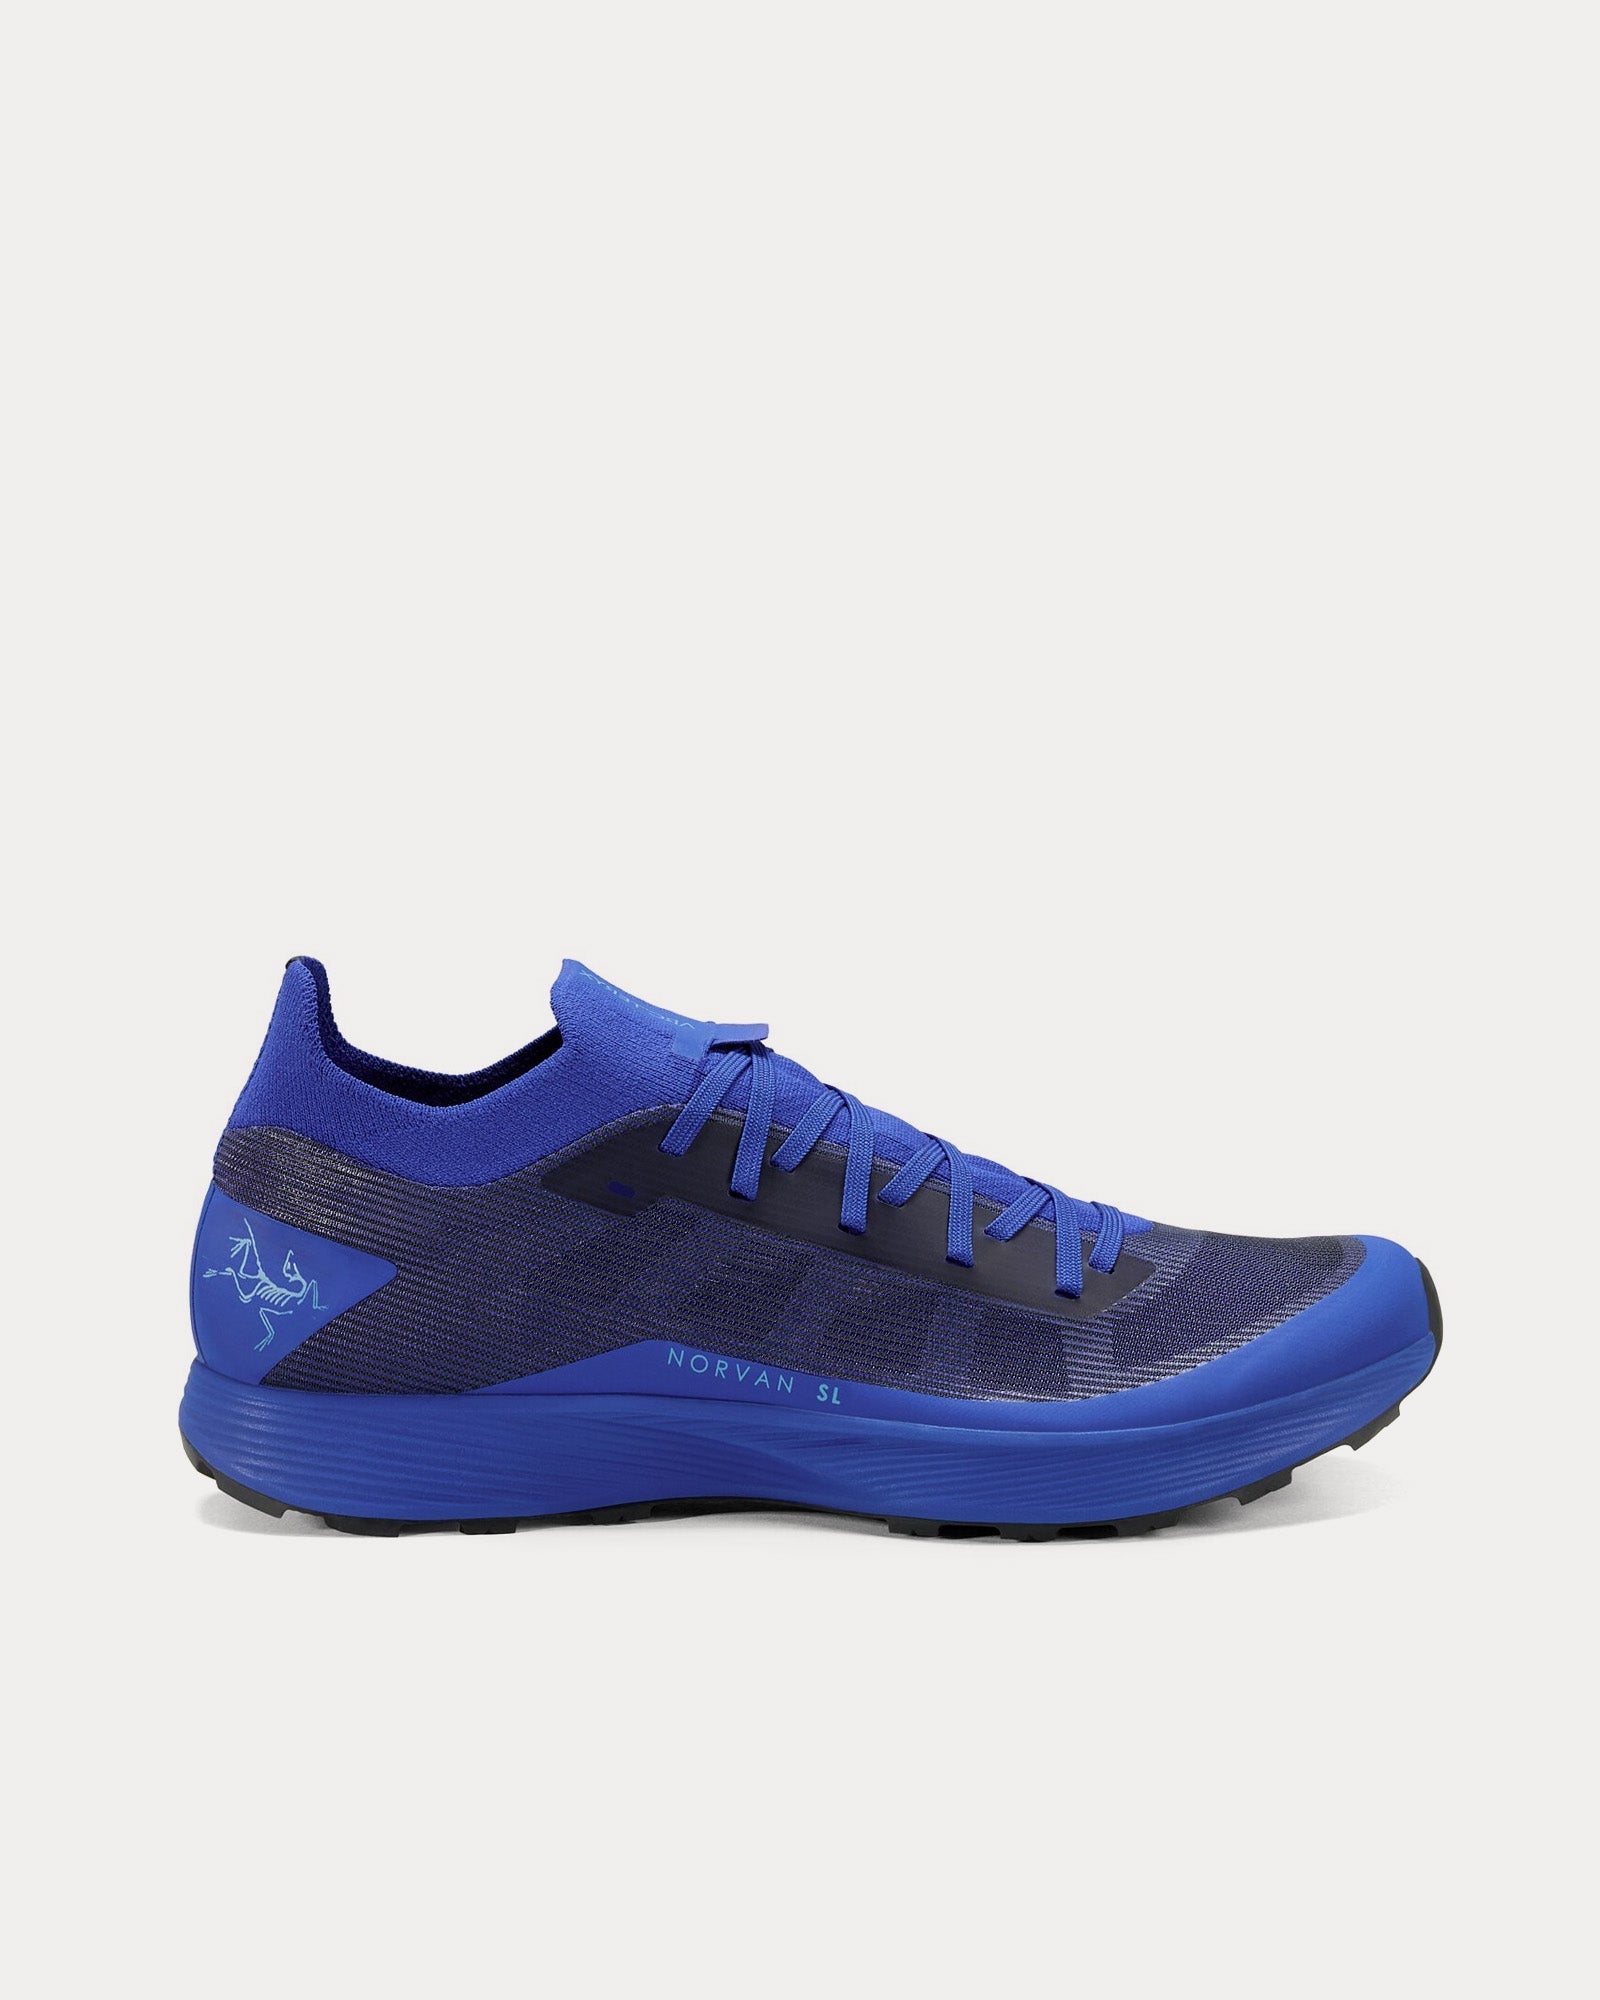 Arc'teryx - Norvan SL 3 Vitality / Vitality Running Shoes